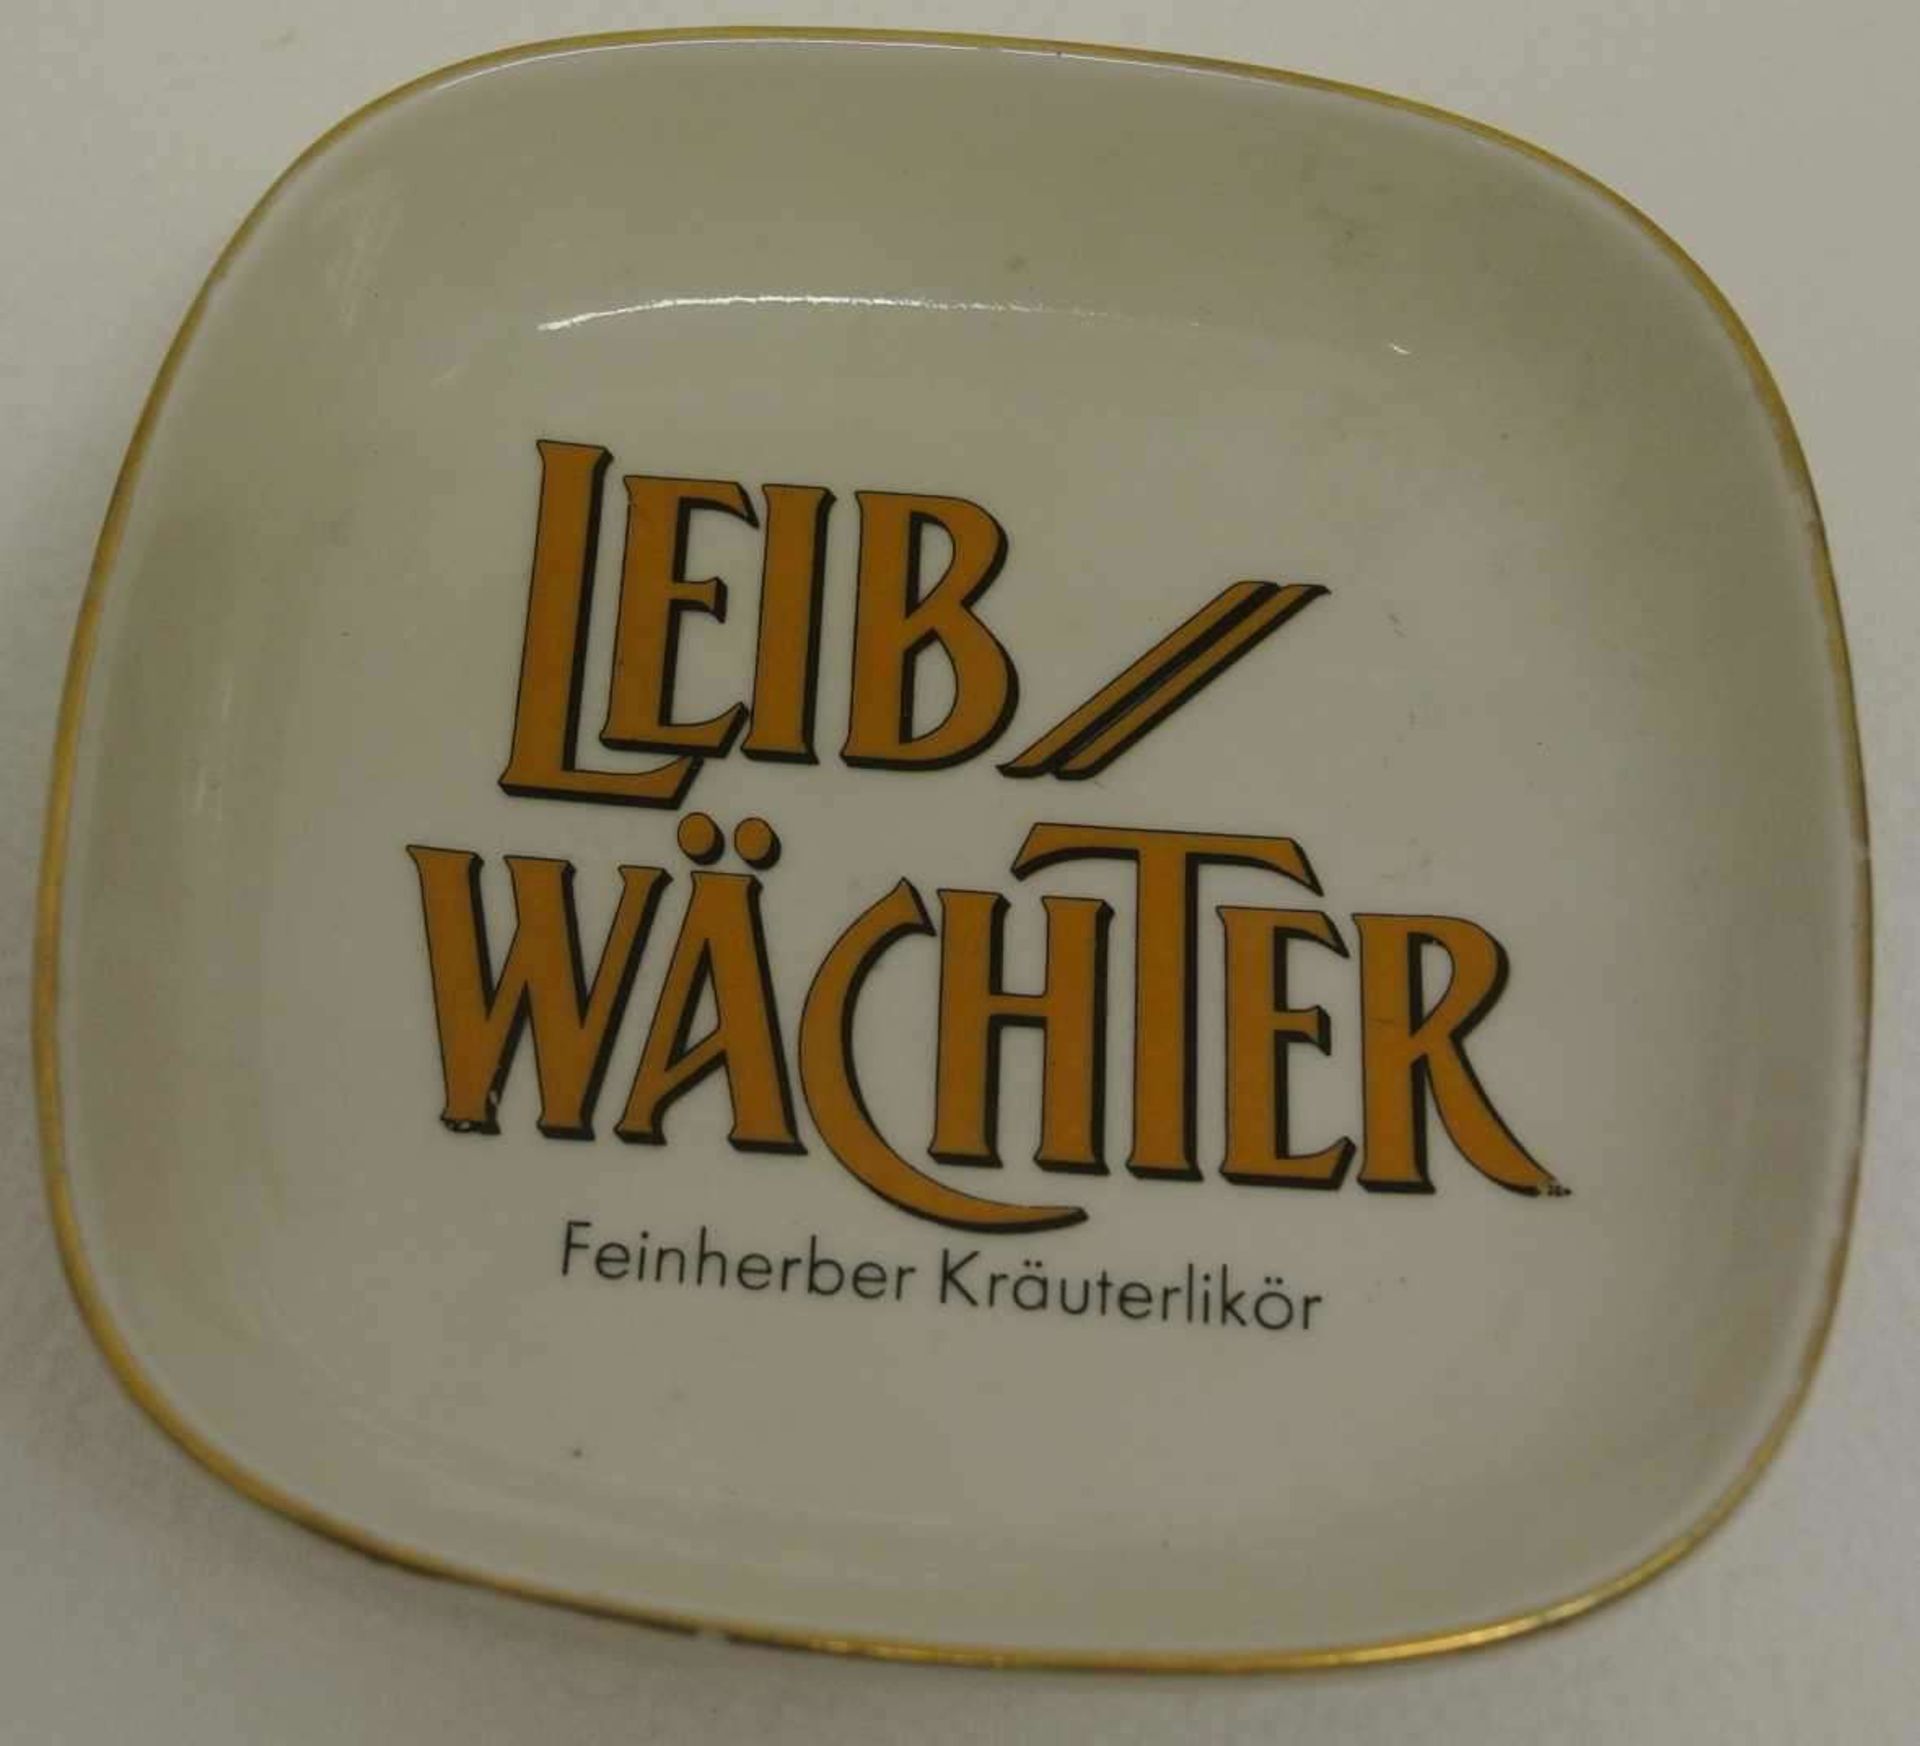 2 Porzellanaschenbecher, 1x Rösler Schaubach, Aufdruck "Leib//Wächter, Feinherber Kräuterlikör", - Bild 2 aus 2